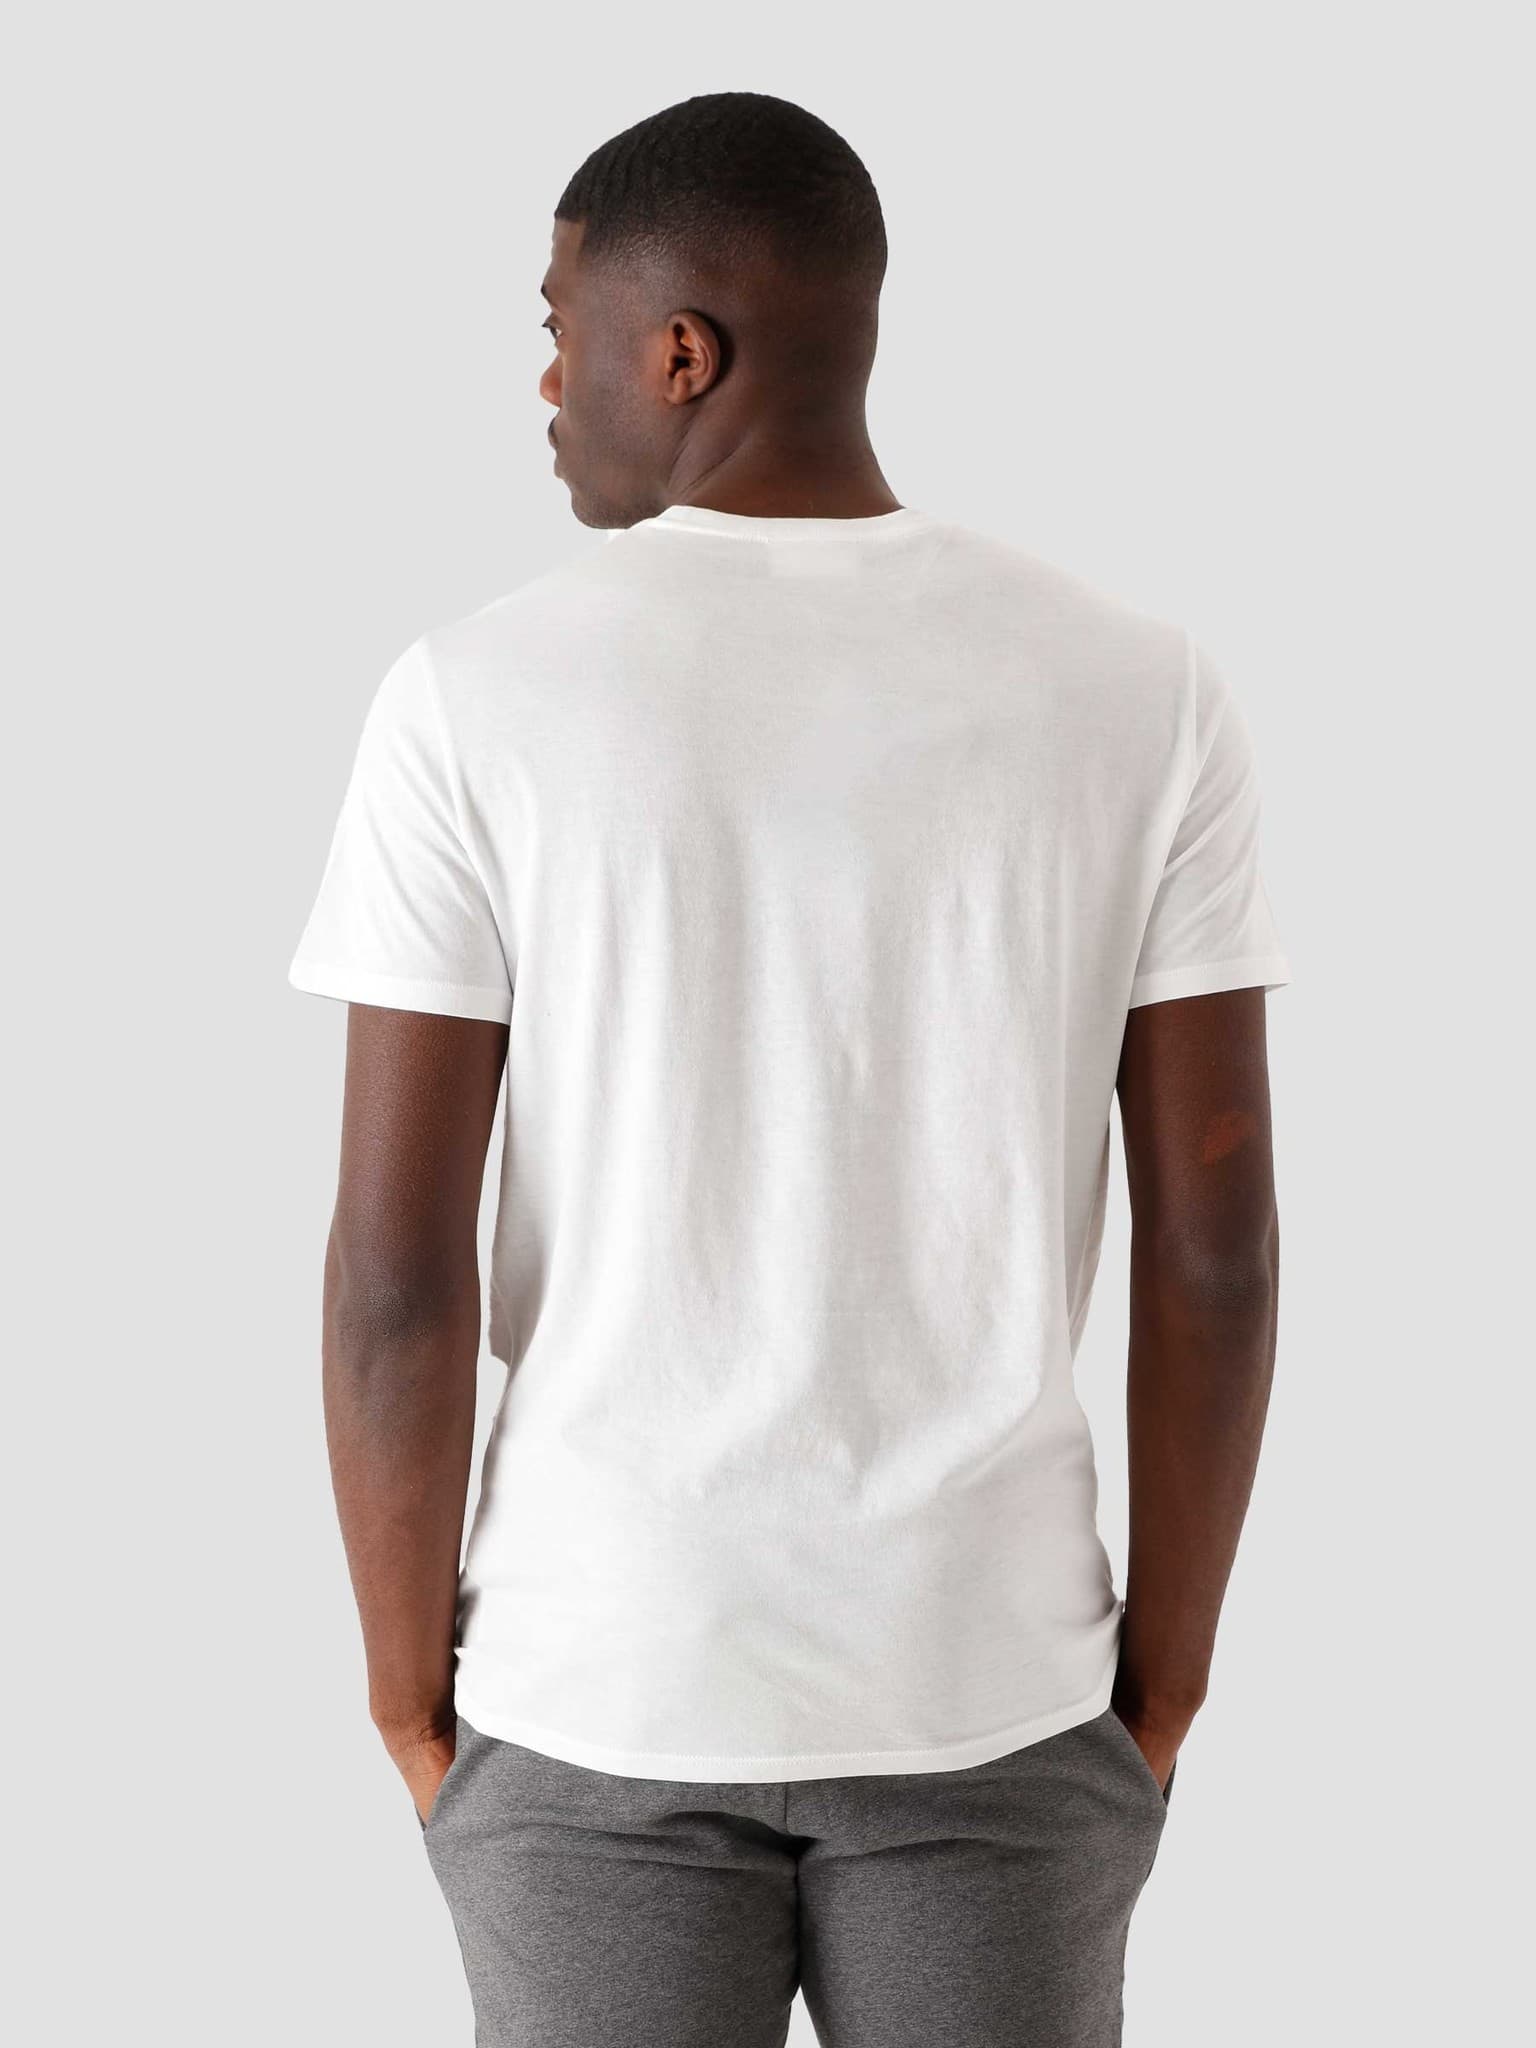 1HT1 Men's T-Shirt White TH6709-11